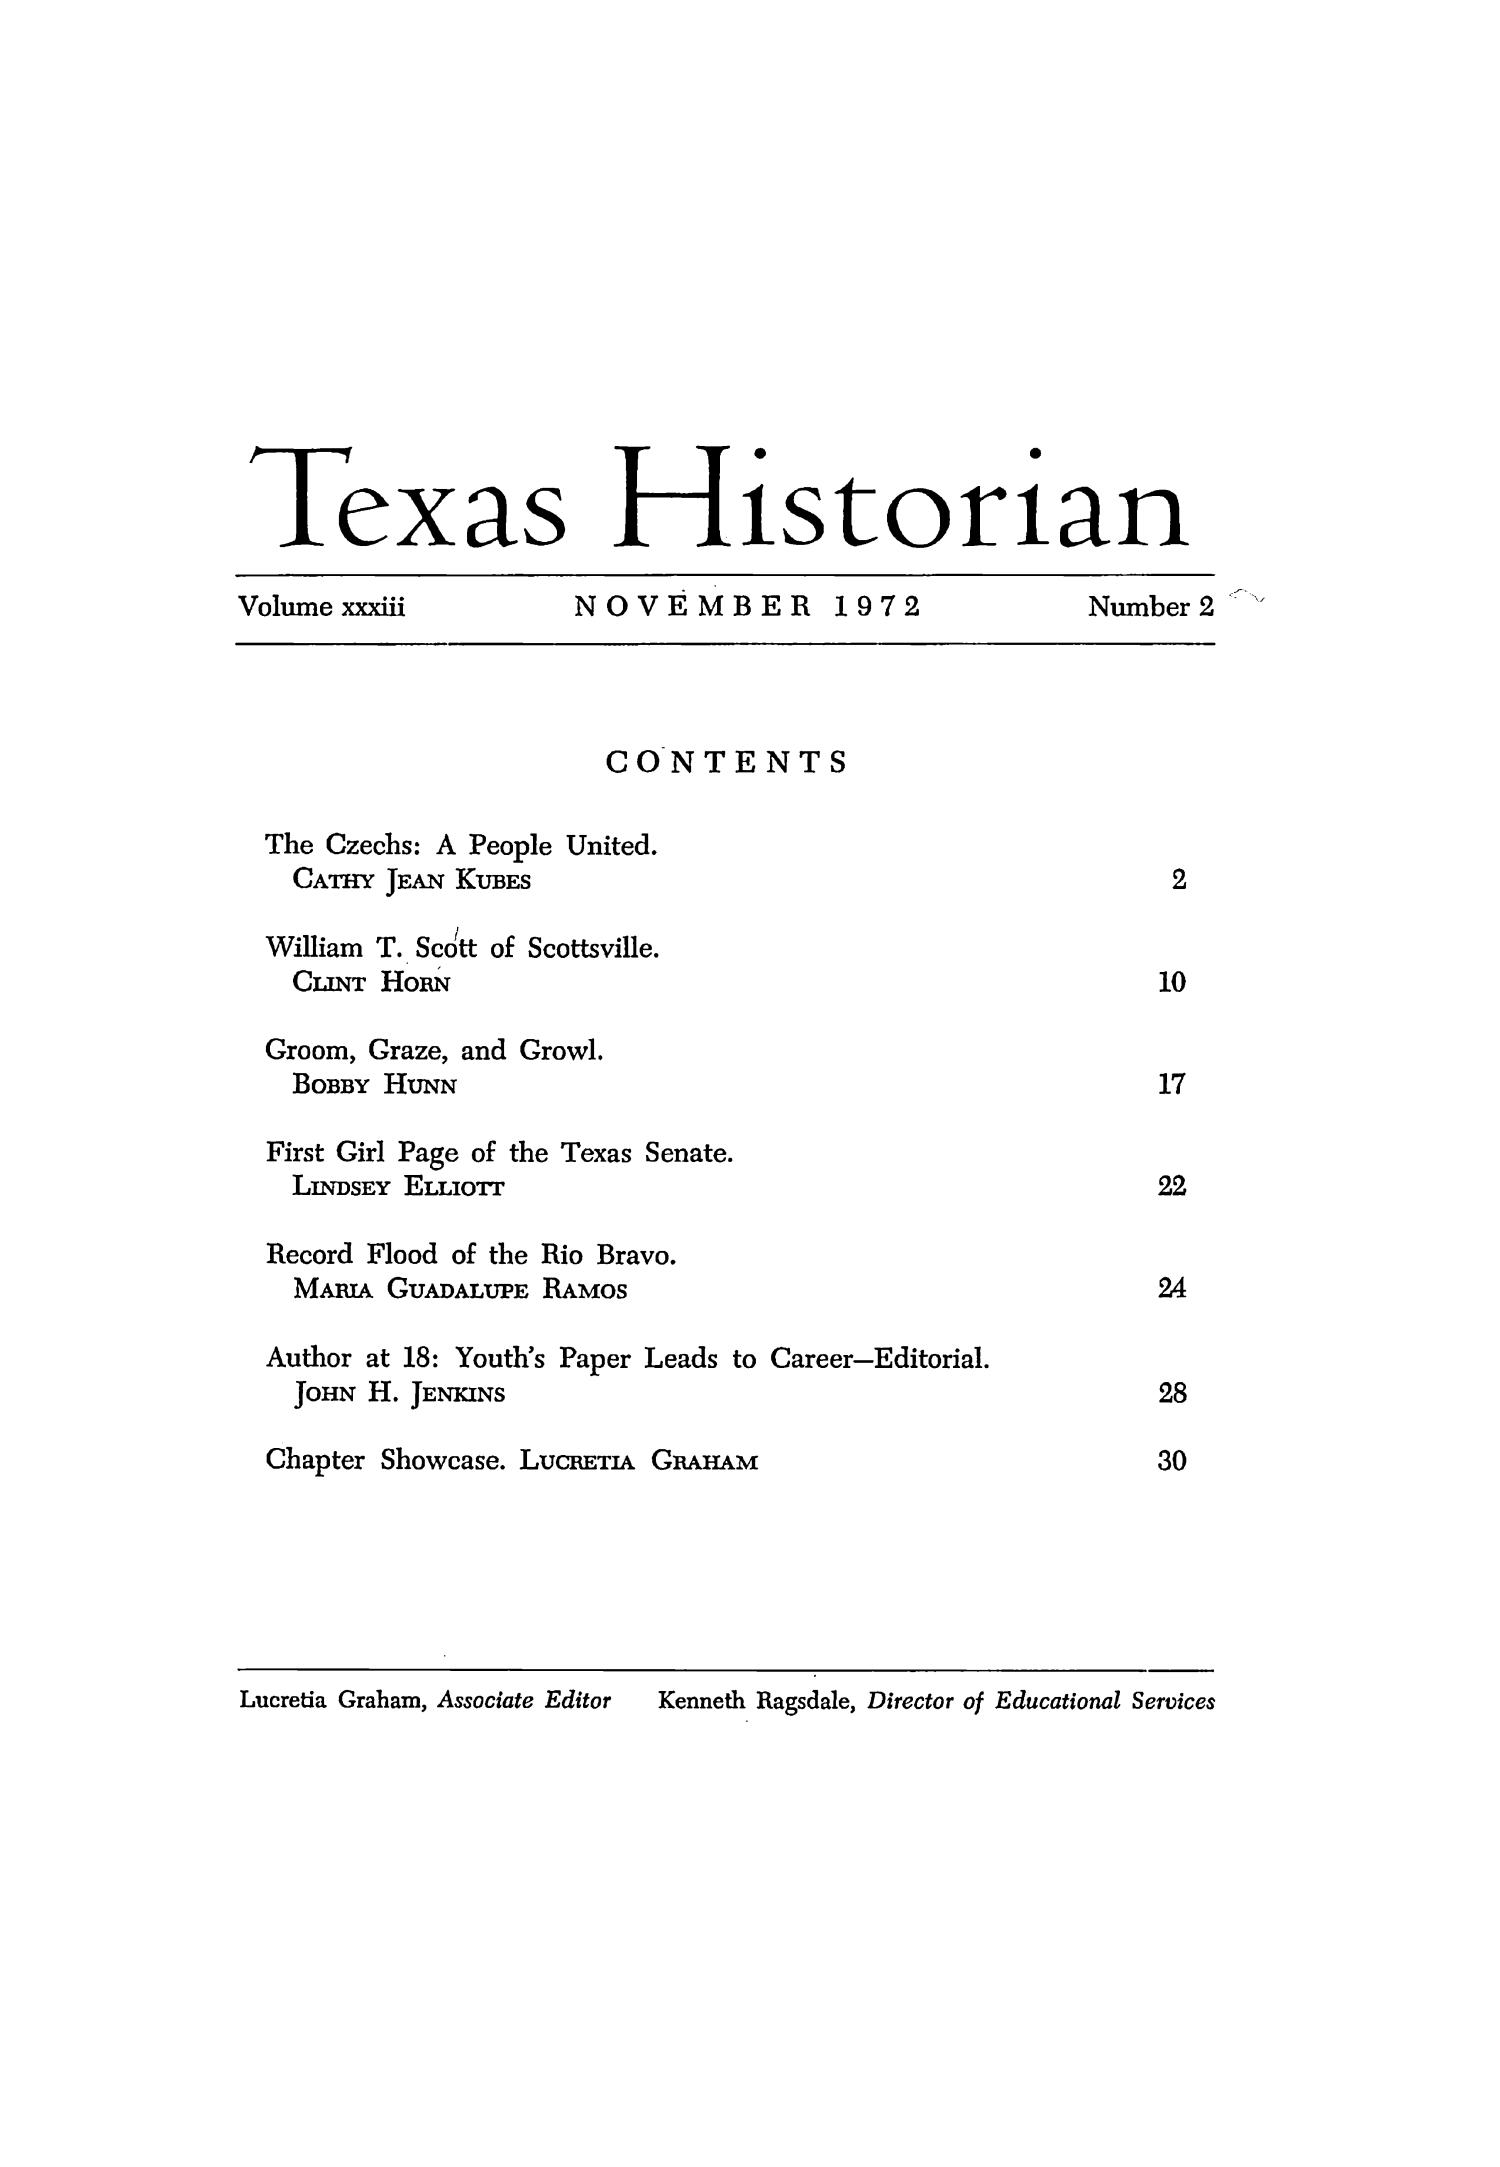 The Texas Historian, Volume 33, Number 2, November 1972
                                                
                                                    1
                                                